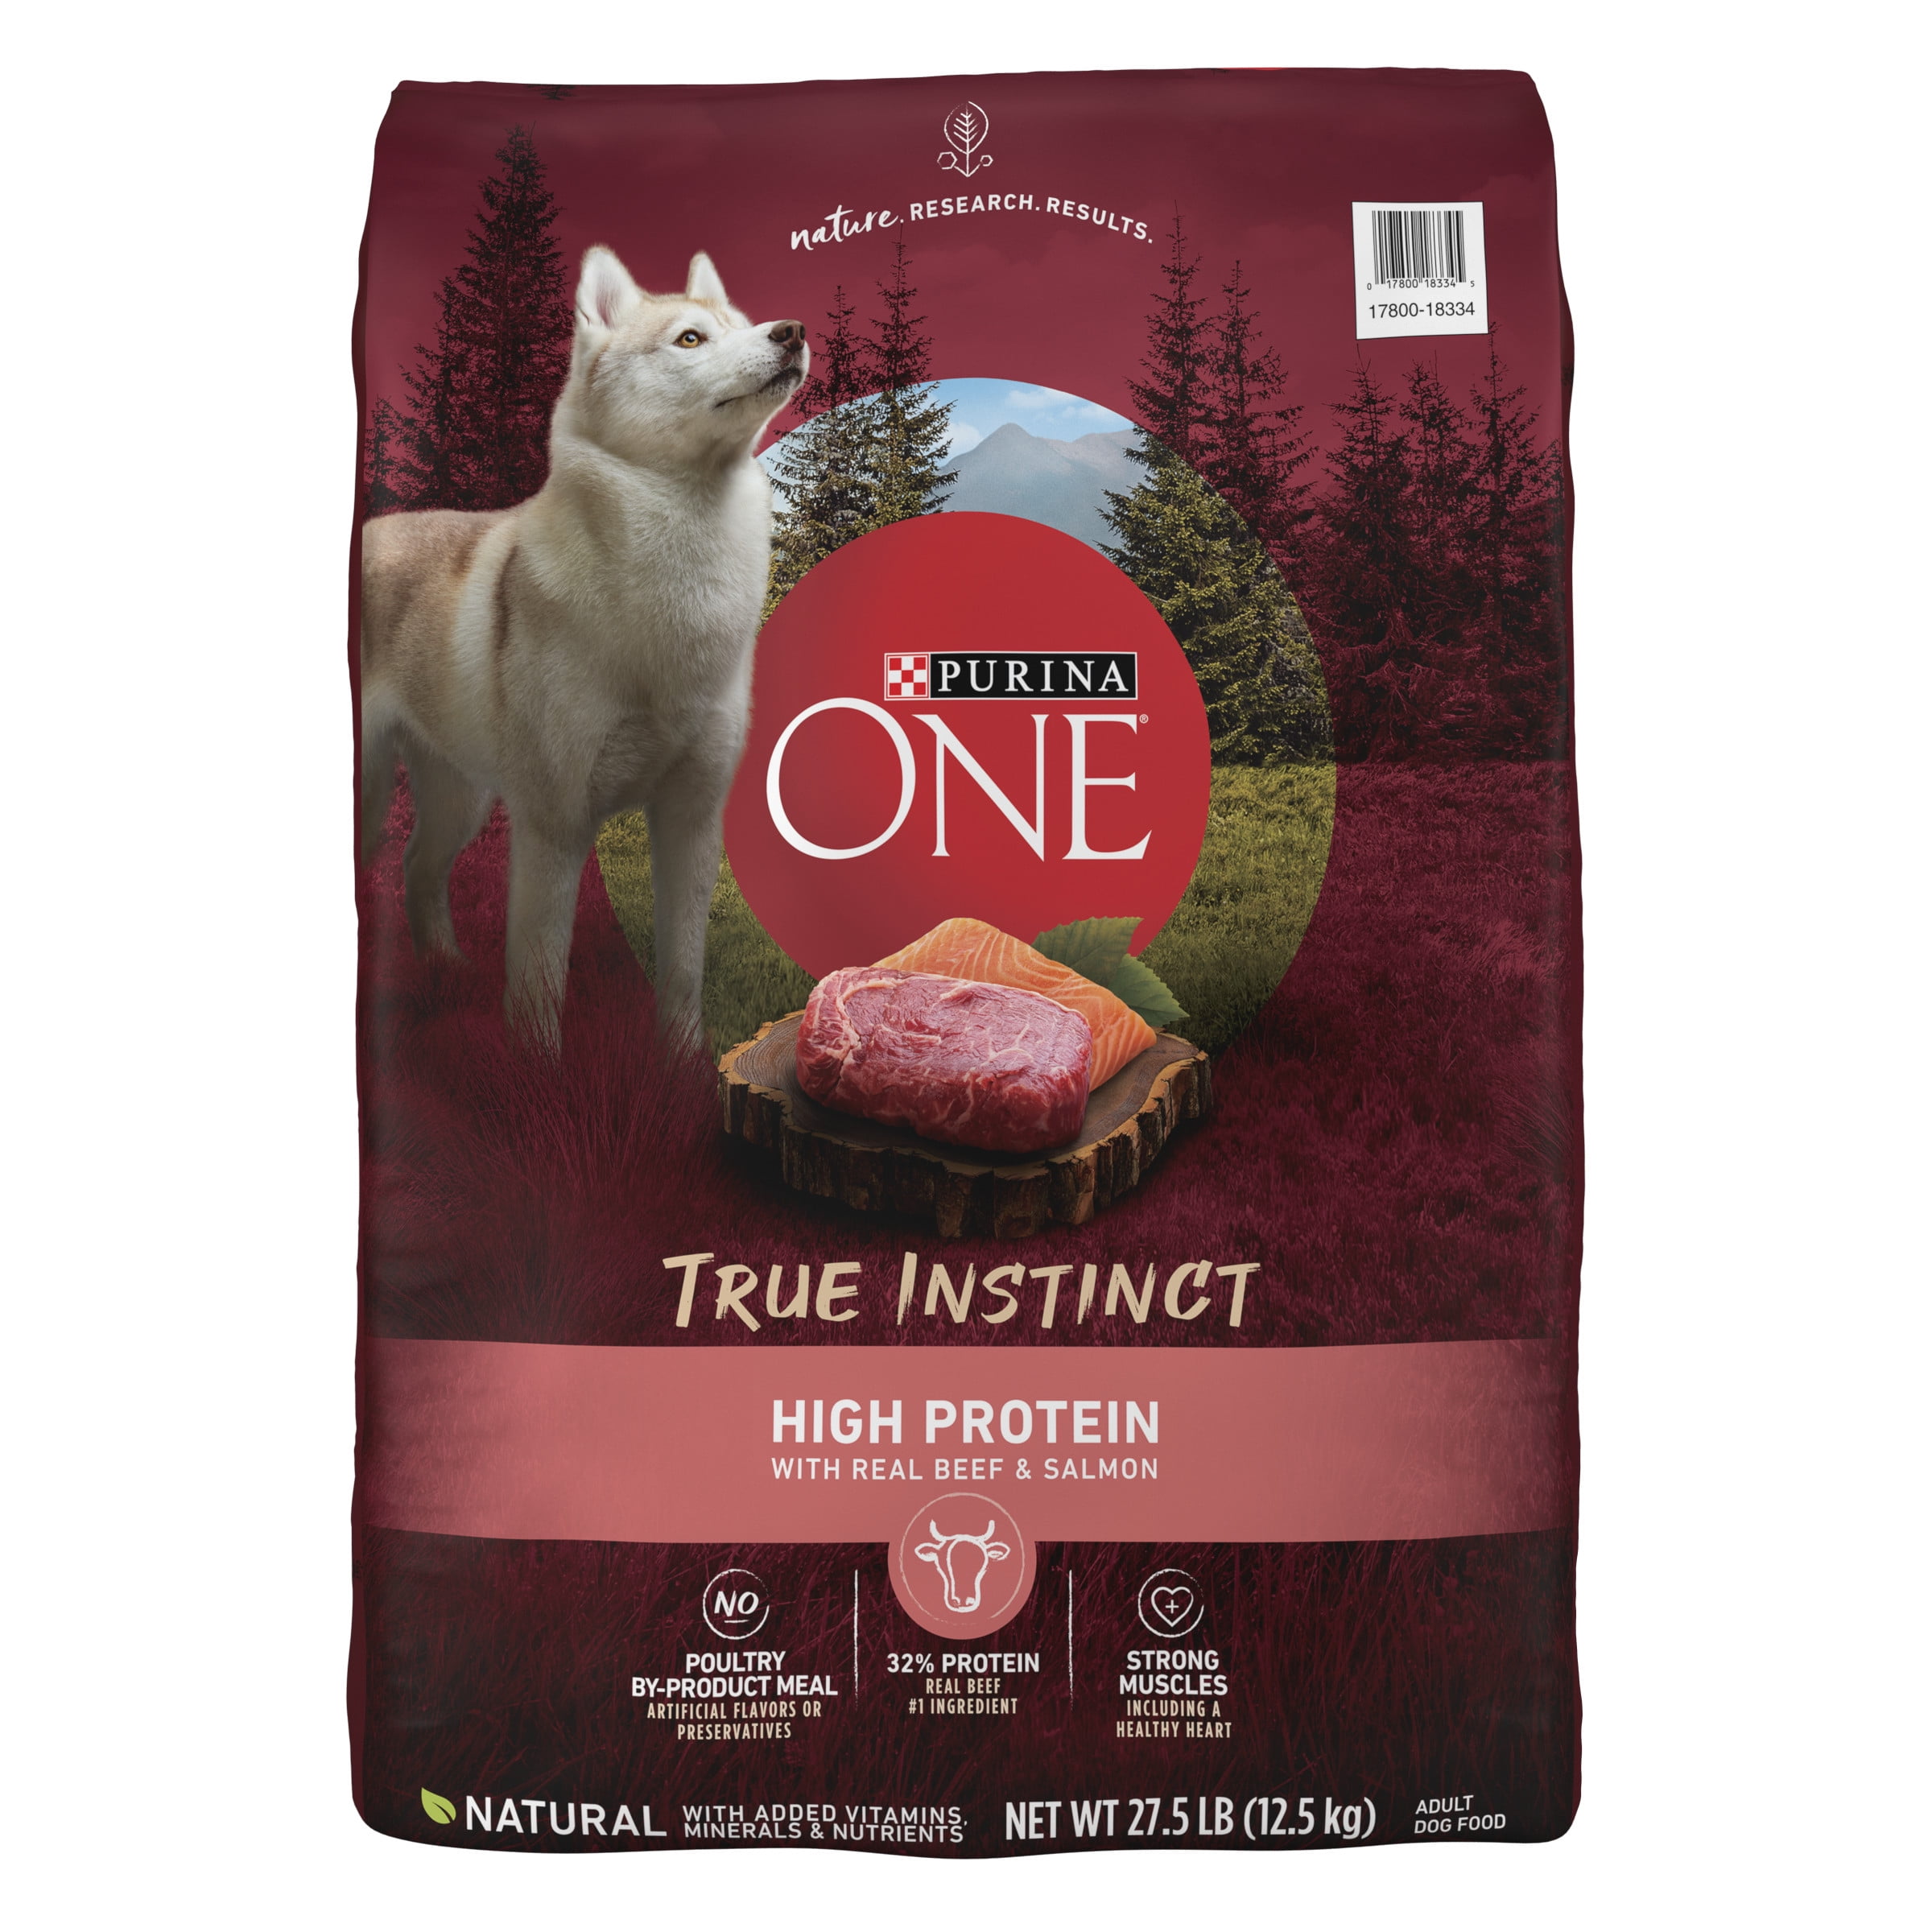 Barry Kamer Arbitrage Purina One True Instinct Dry Dog Food Beef and Salmon, 15 lb Bag -  Walmart.com